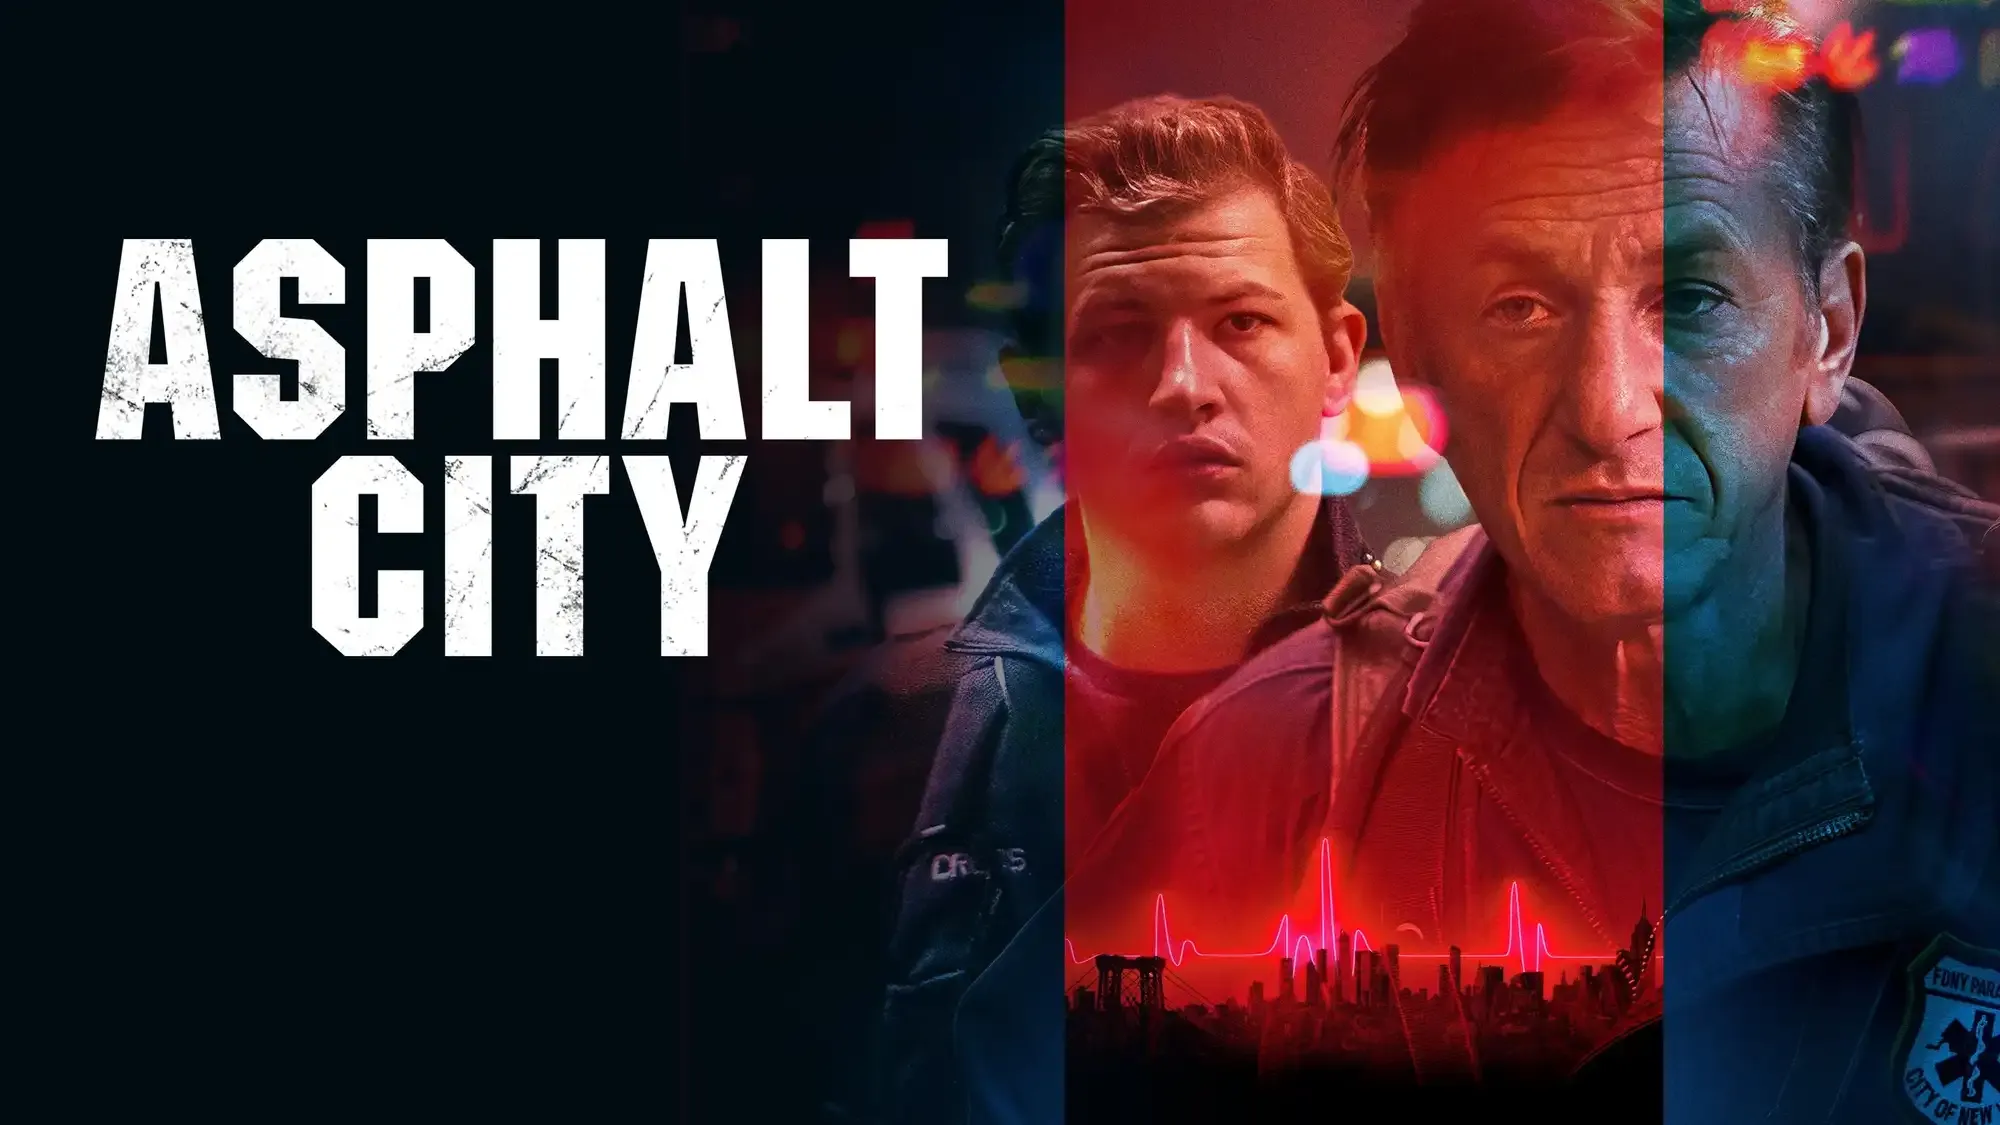 Asphalt City movie review